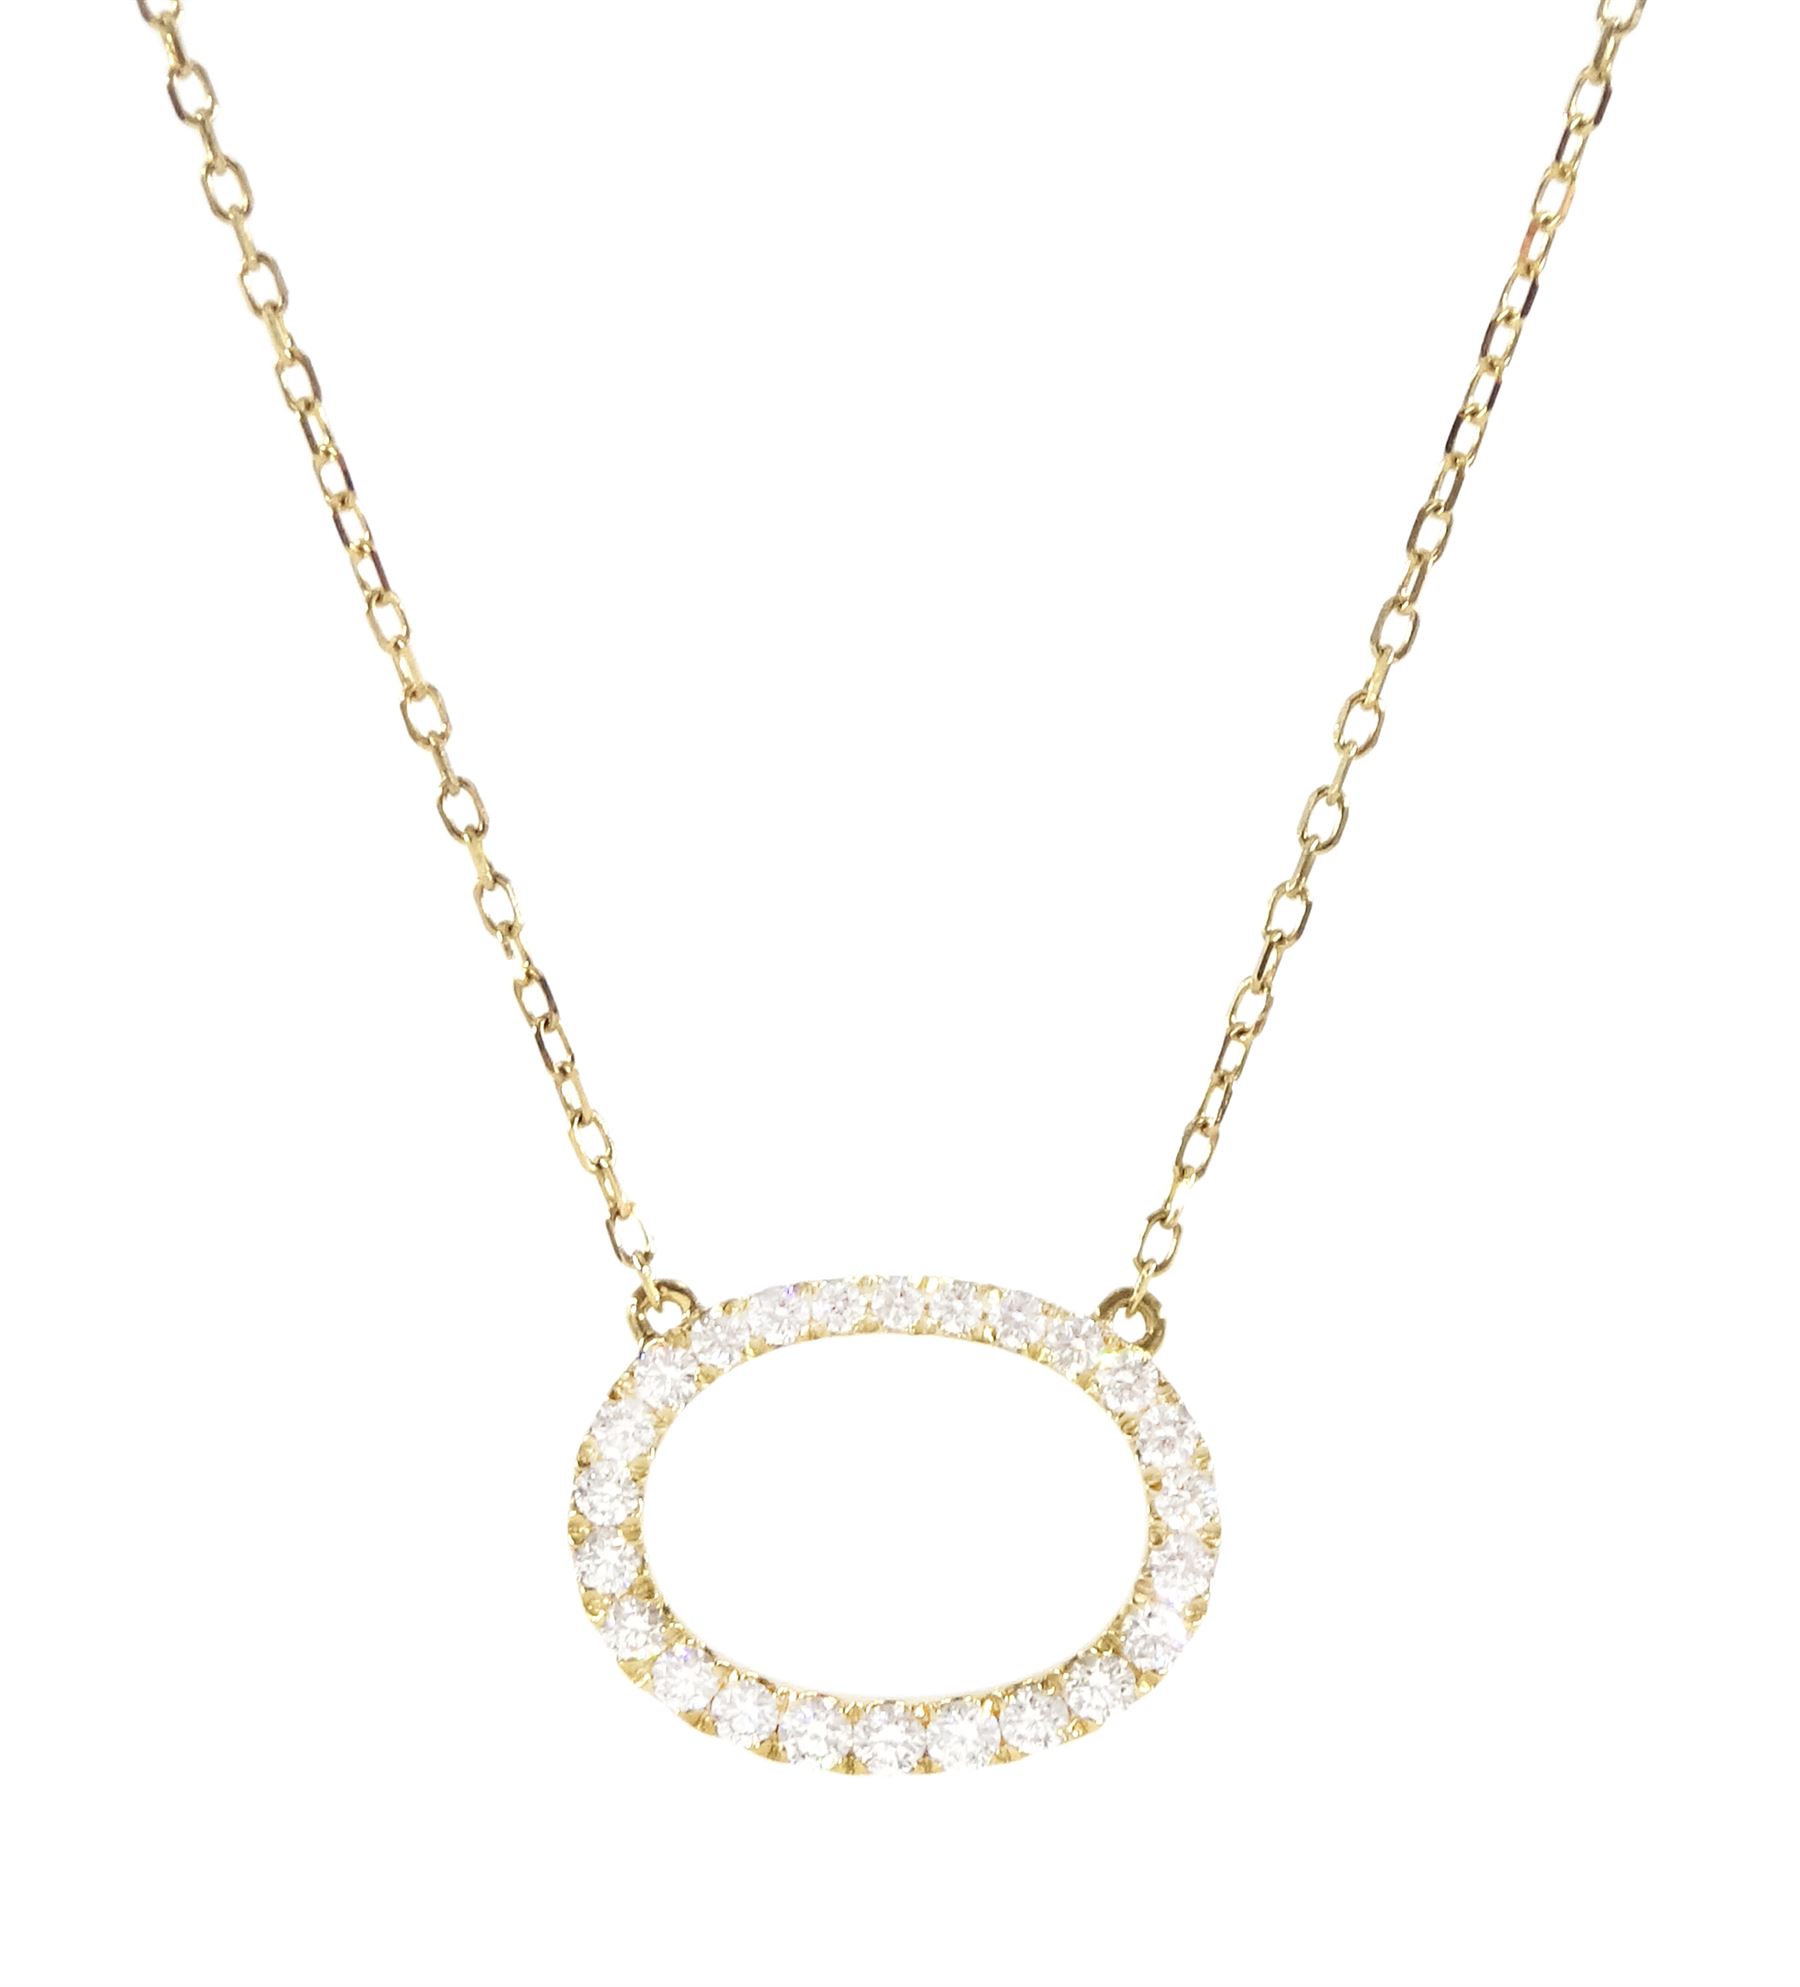 18ct gold round brilliant cut diamond oval shaped pendant necklace